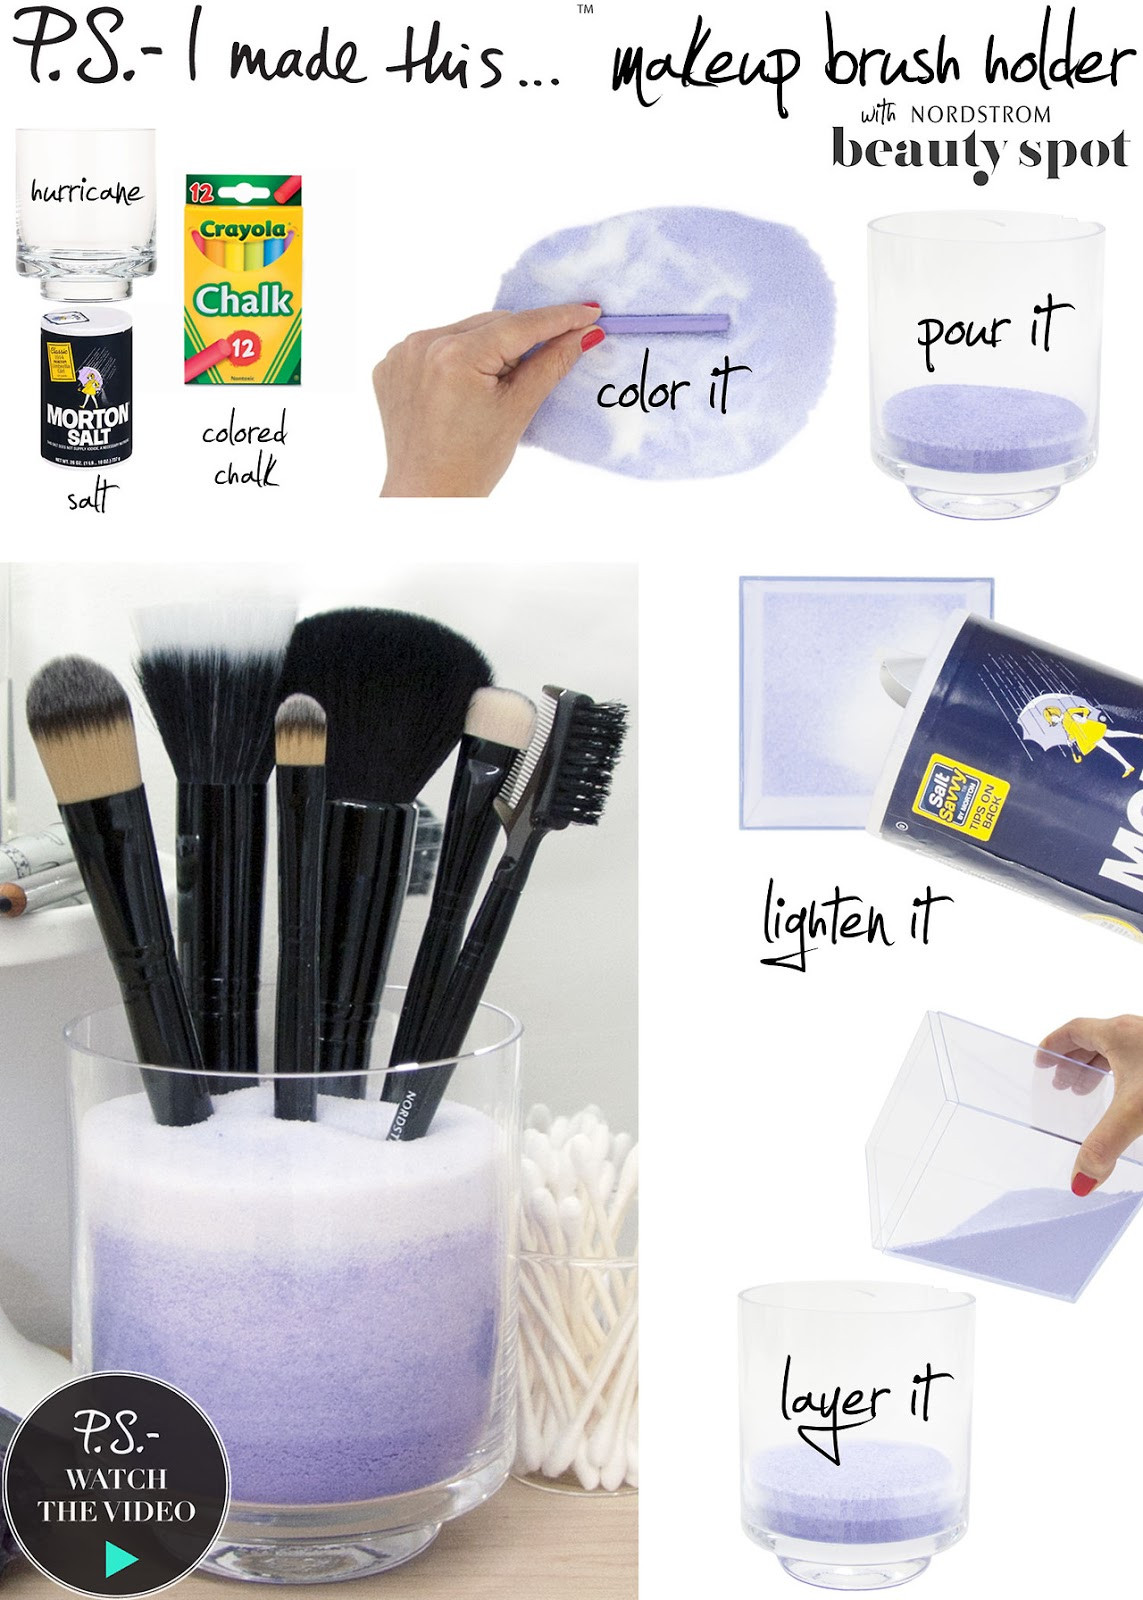 Best ideas about DIY Makeup Brush Holder
. Save or Pin SOBBING ON FIFTH DIY Makeup Brush Holder Now.